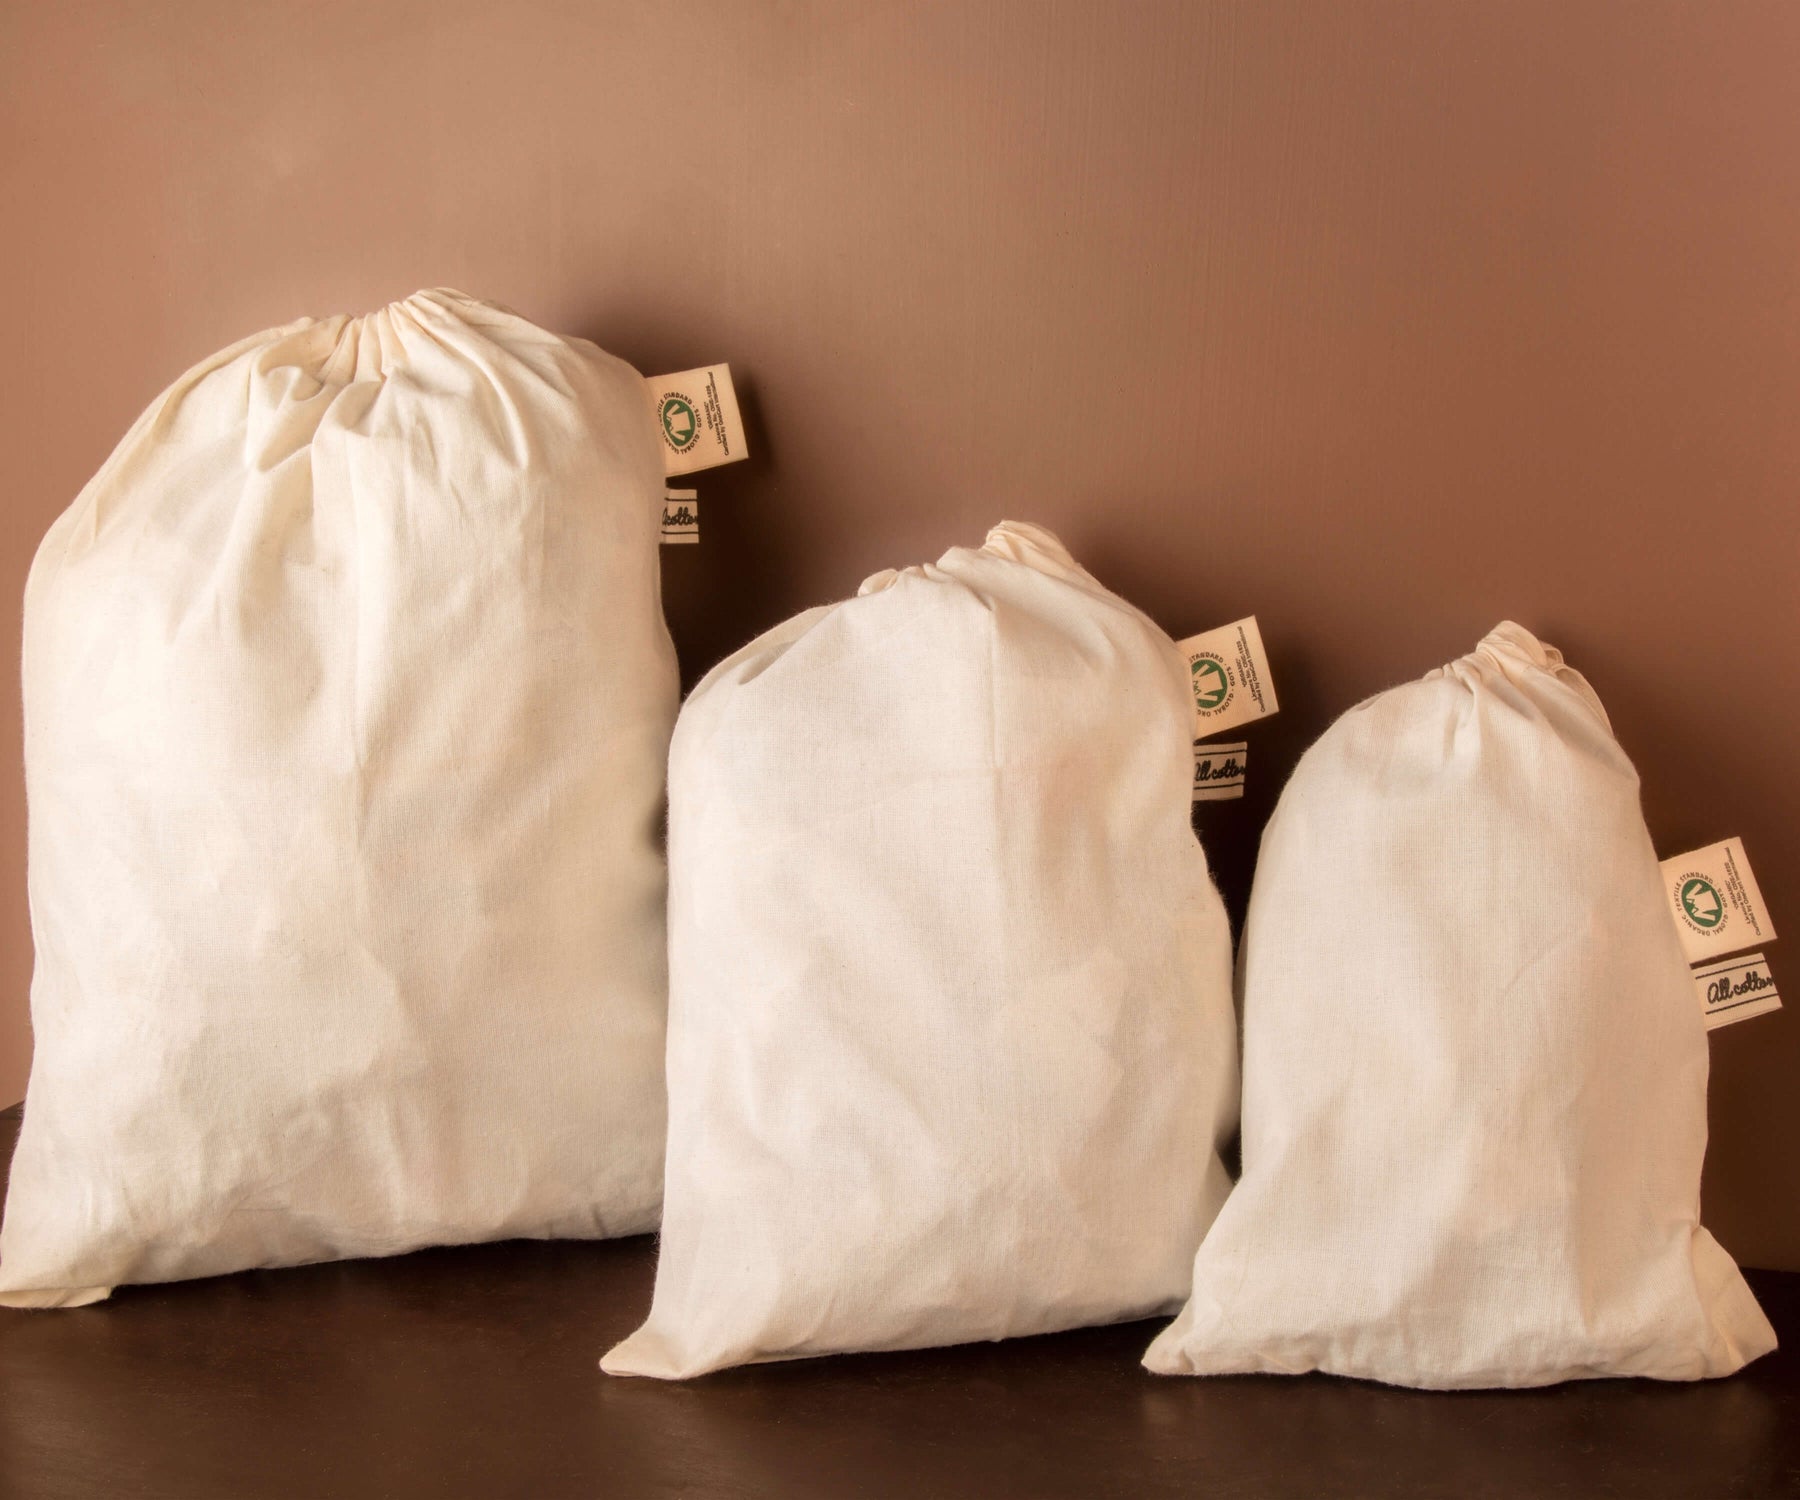  DRQ Cotton Drawstring Bags, EcoFriendly Muslin Bags (5